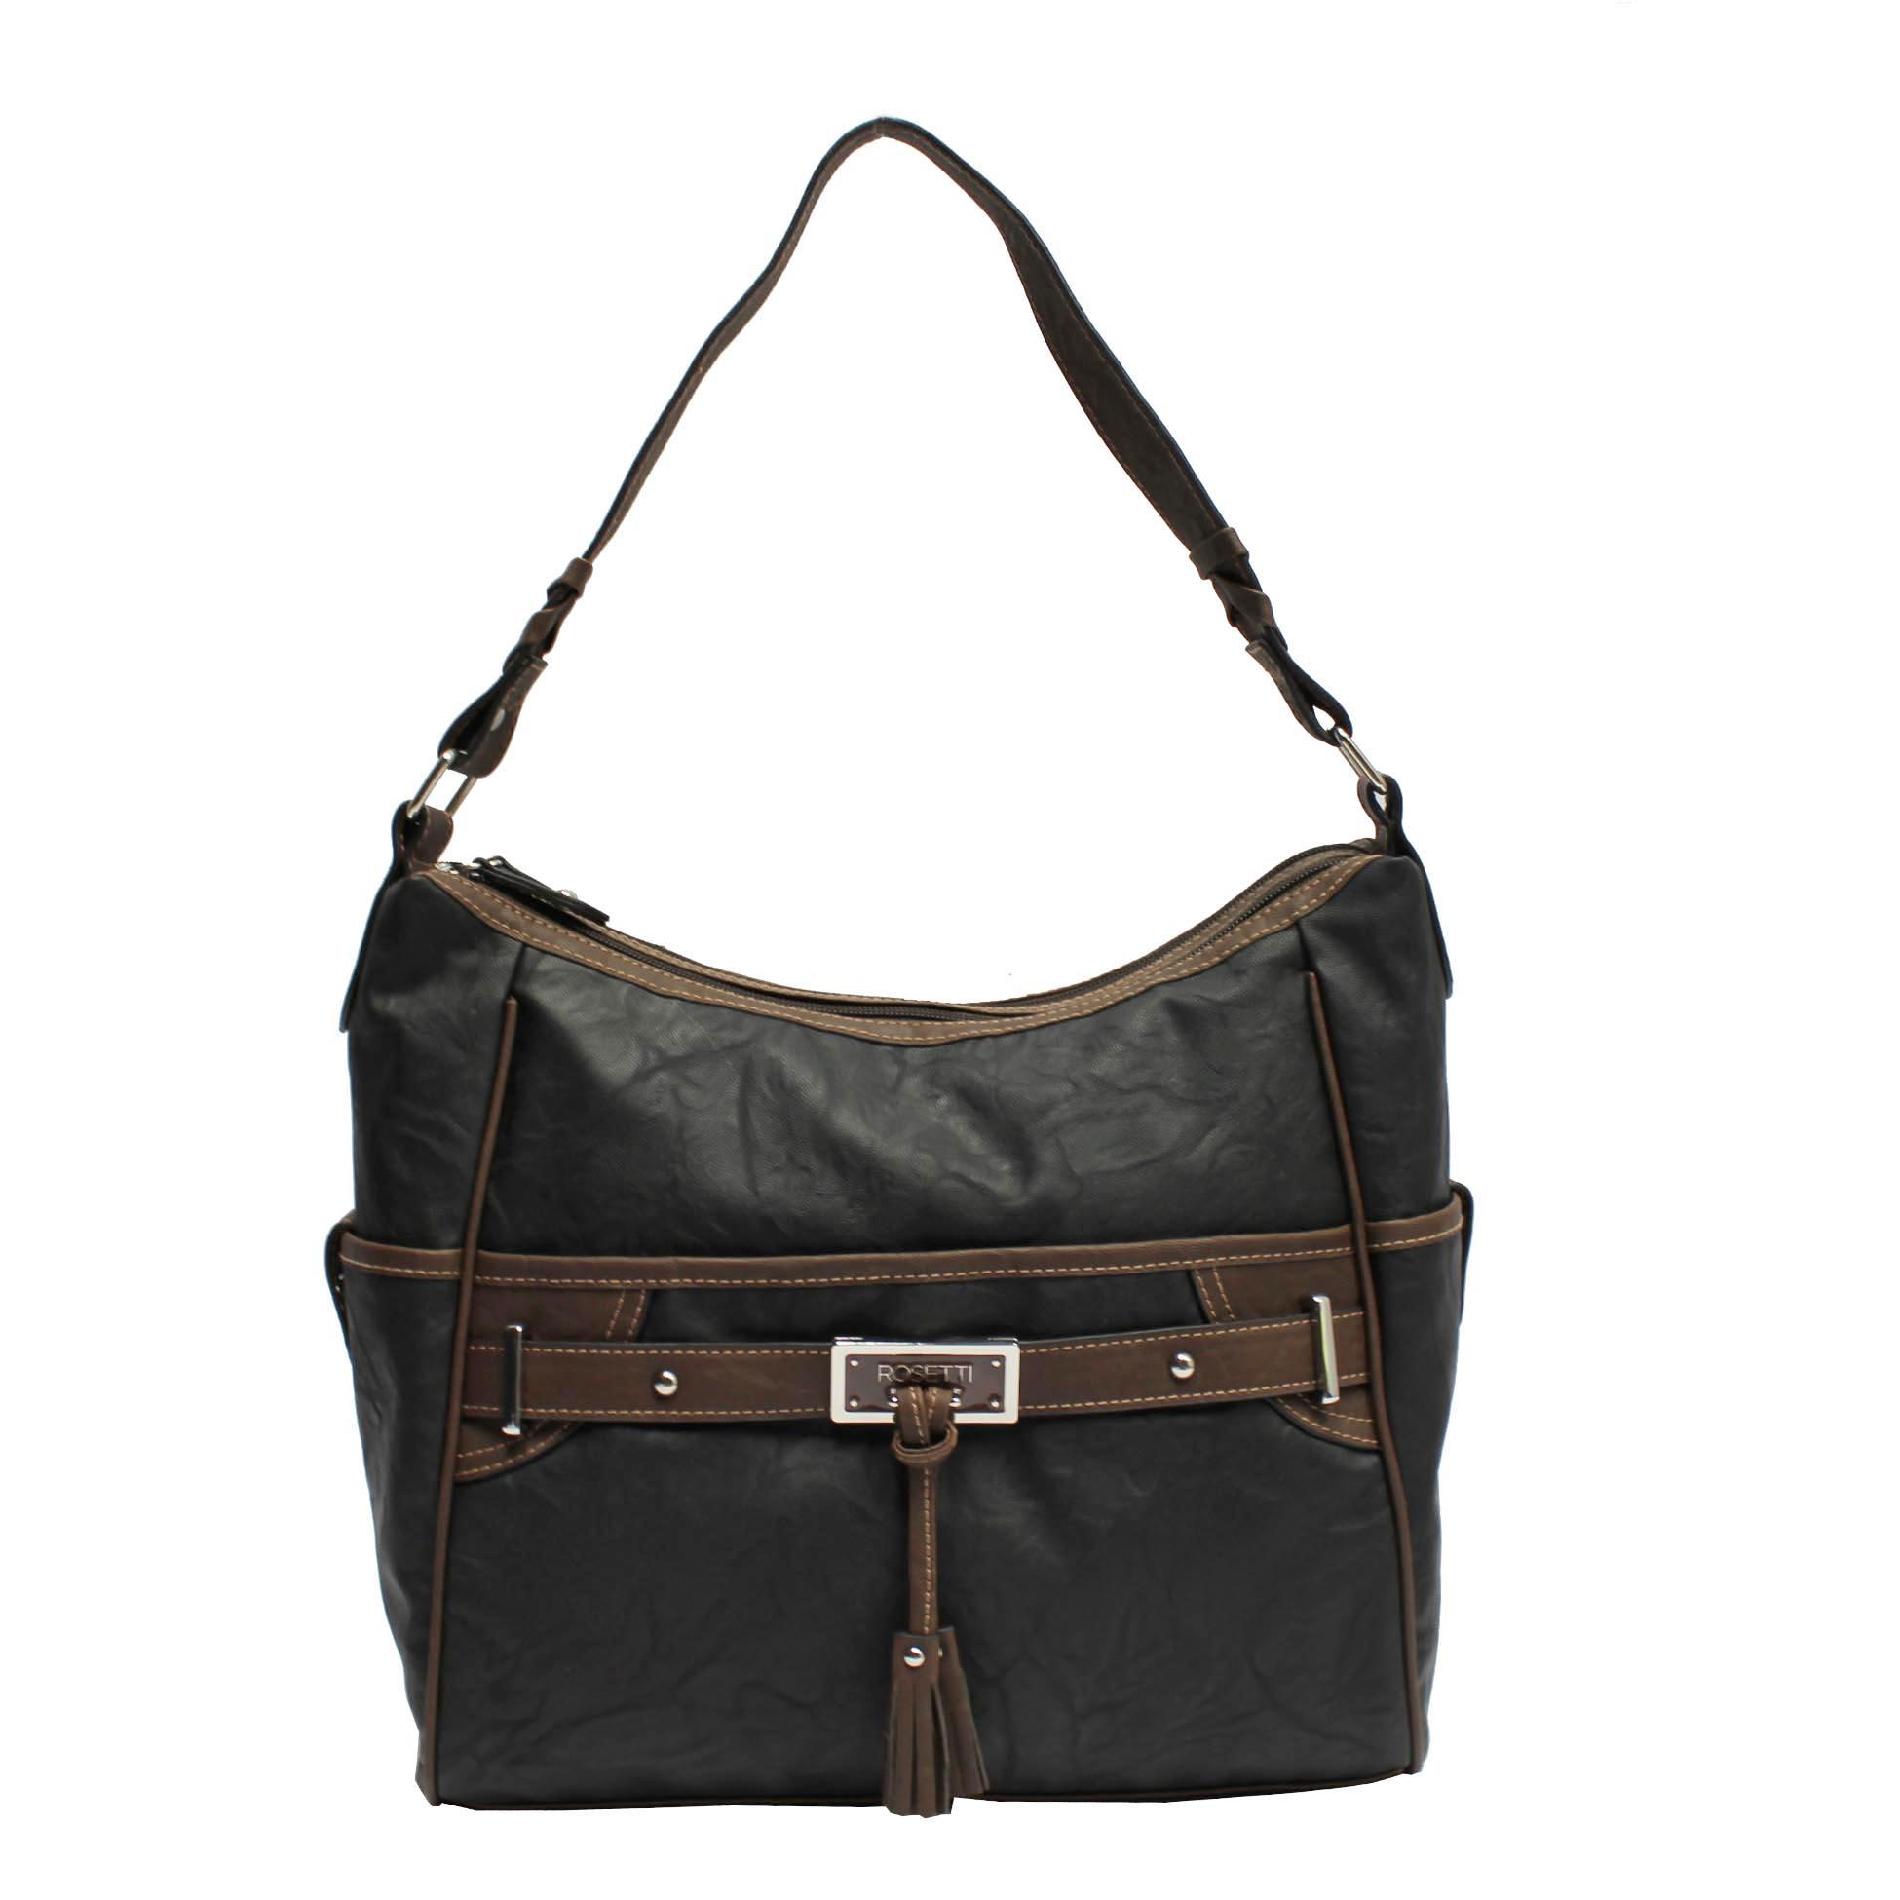 Rosetti Women's Deluxe Edition Shopper Handbag - Faux Leather